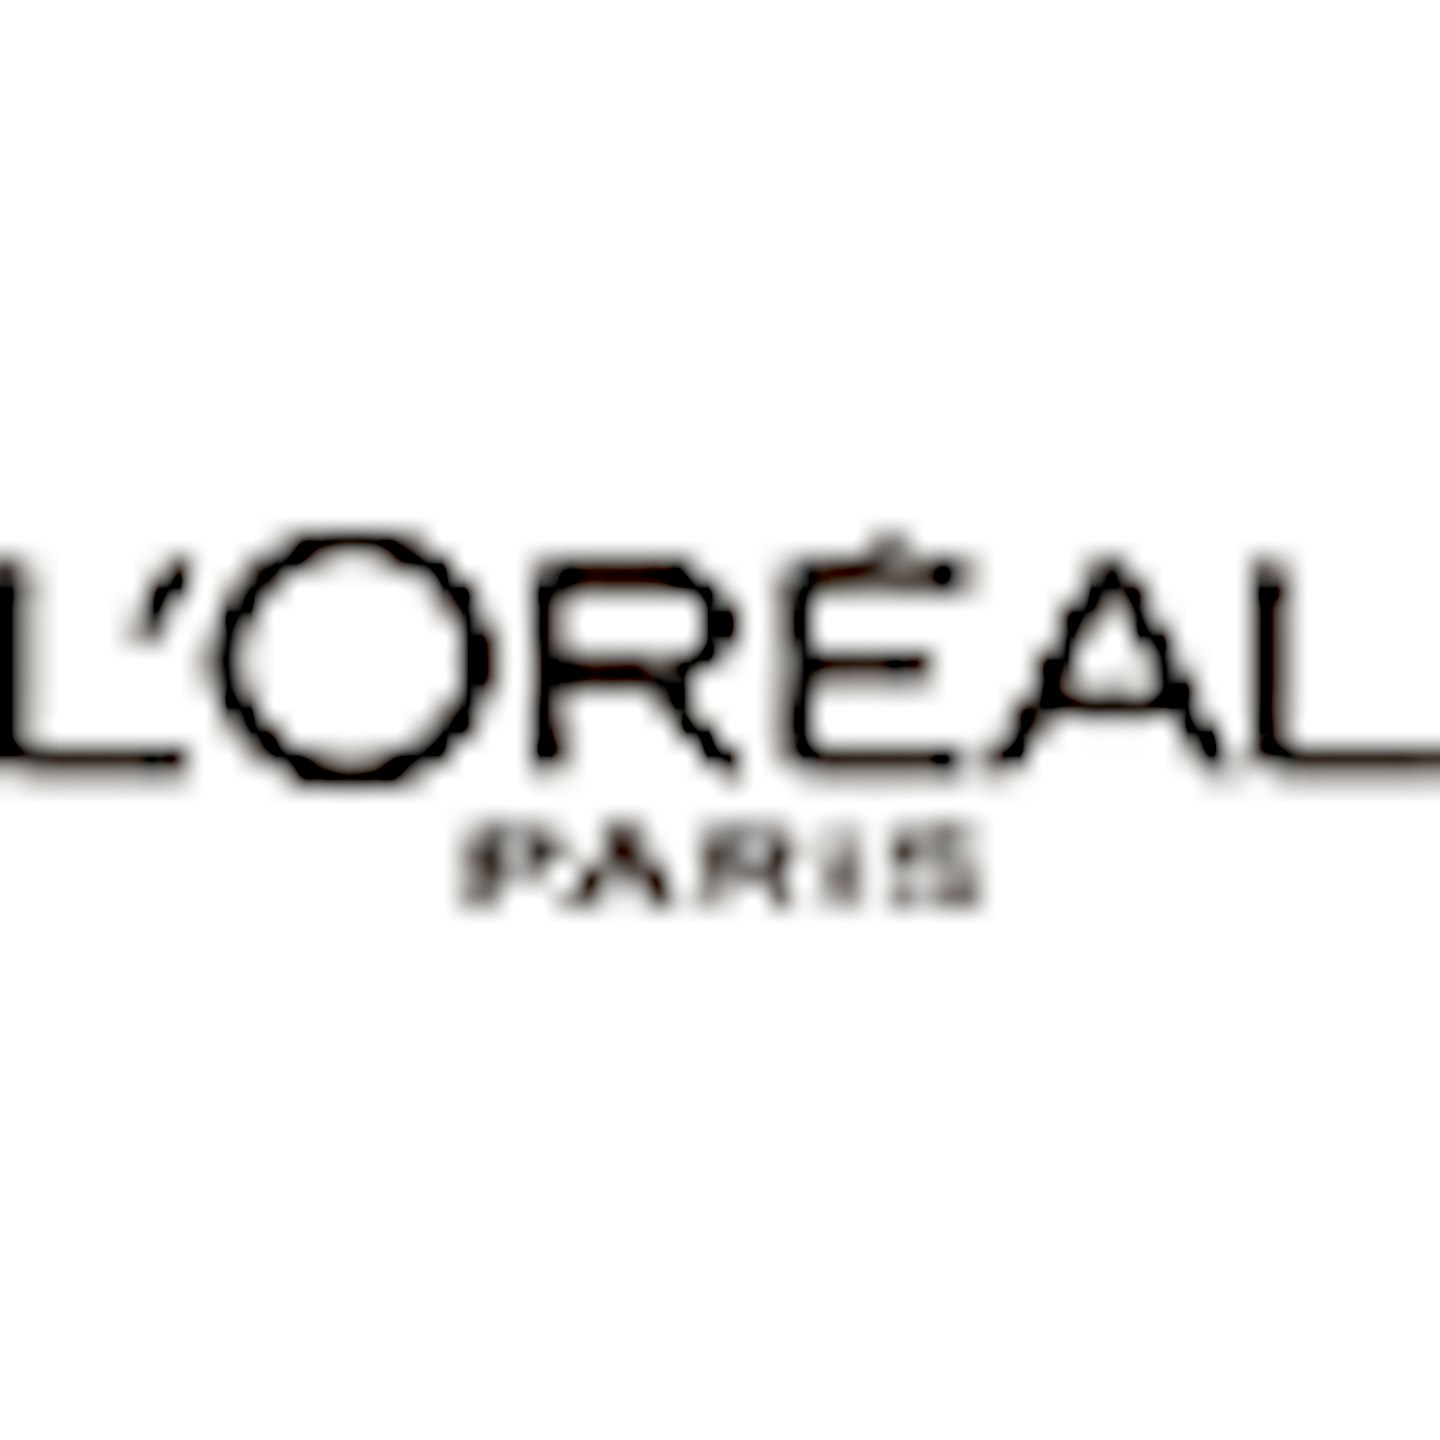 L'Oreal Paris logo